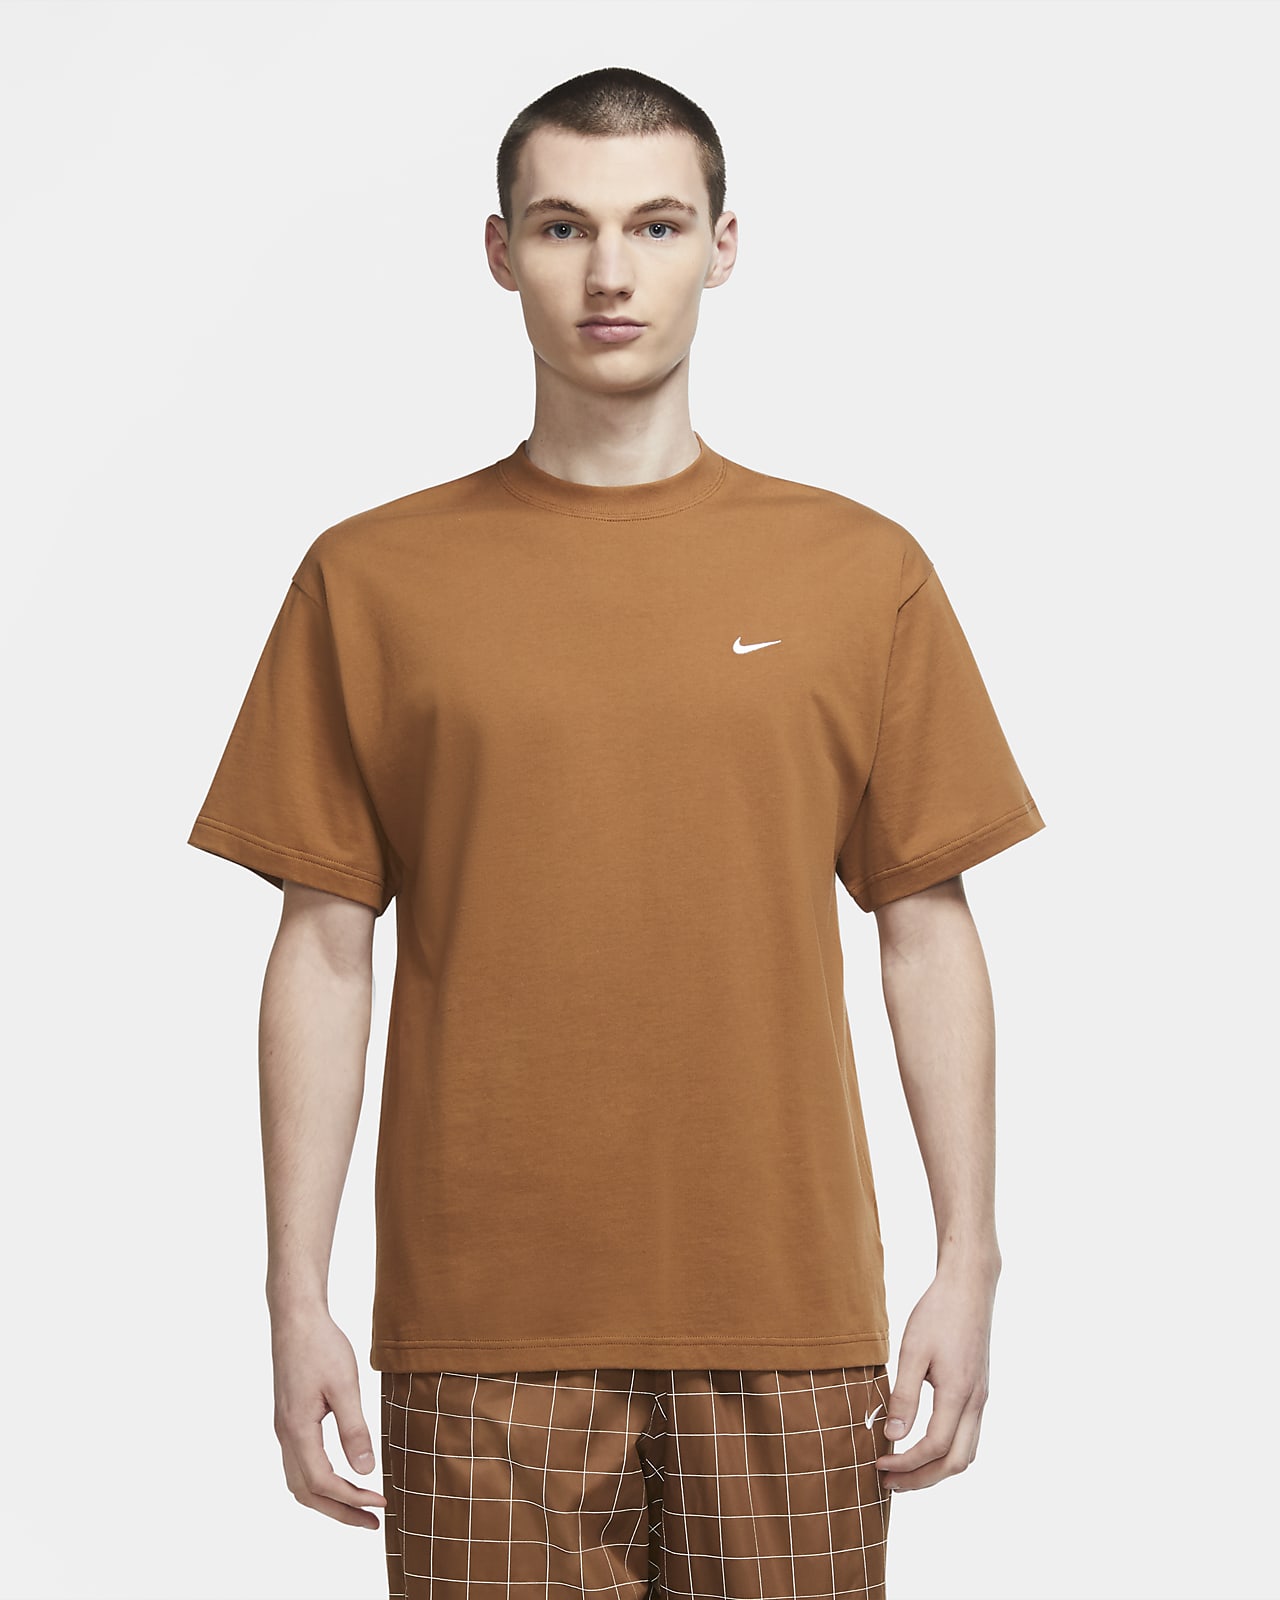 Download NikeLab Men's T-Shirt. Nike.com